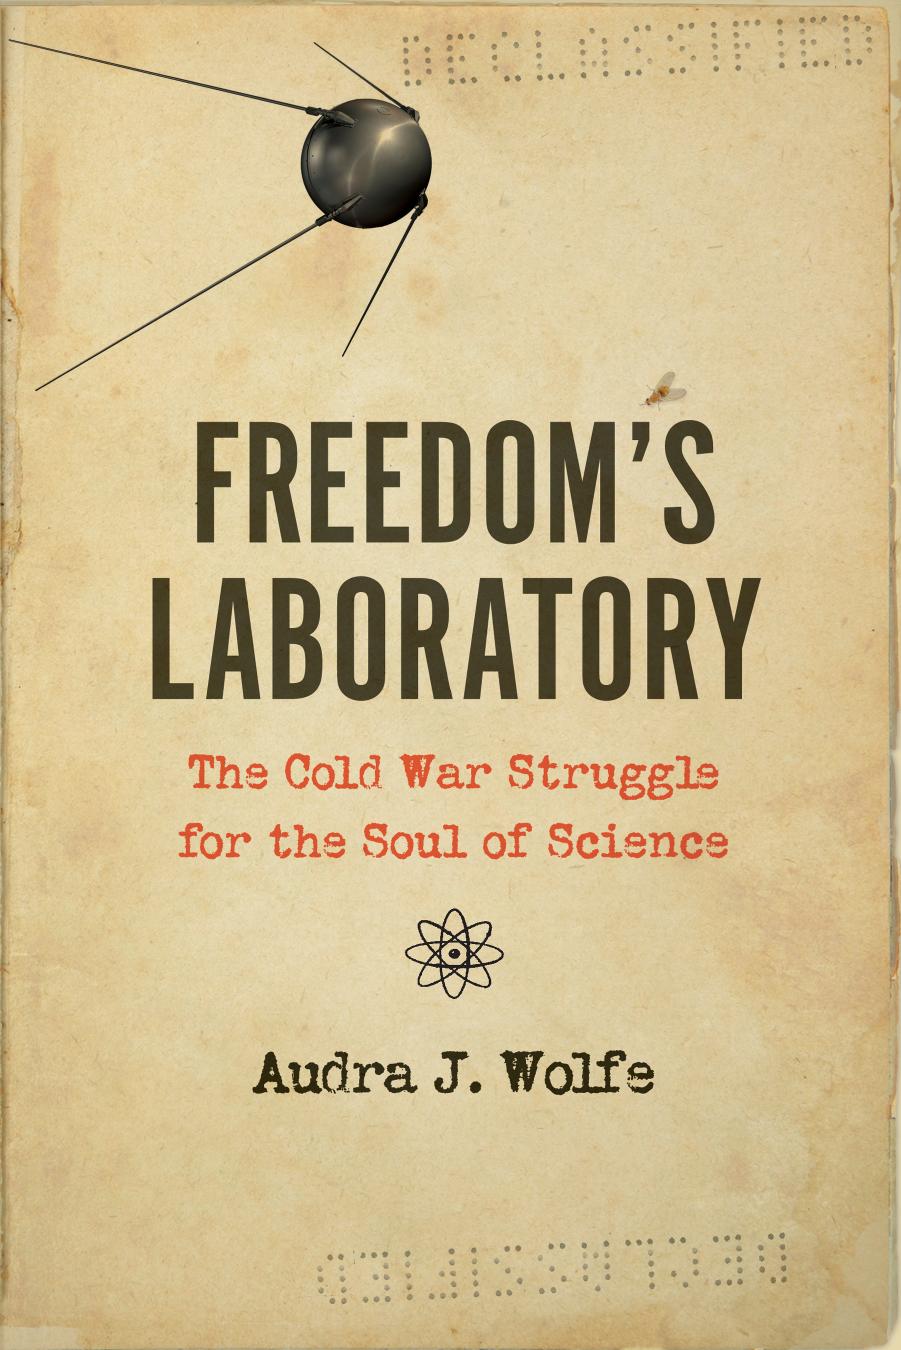 Freedom's Laboratory by Audra J. Wolfe